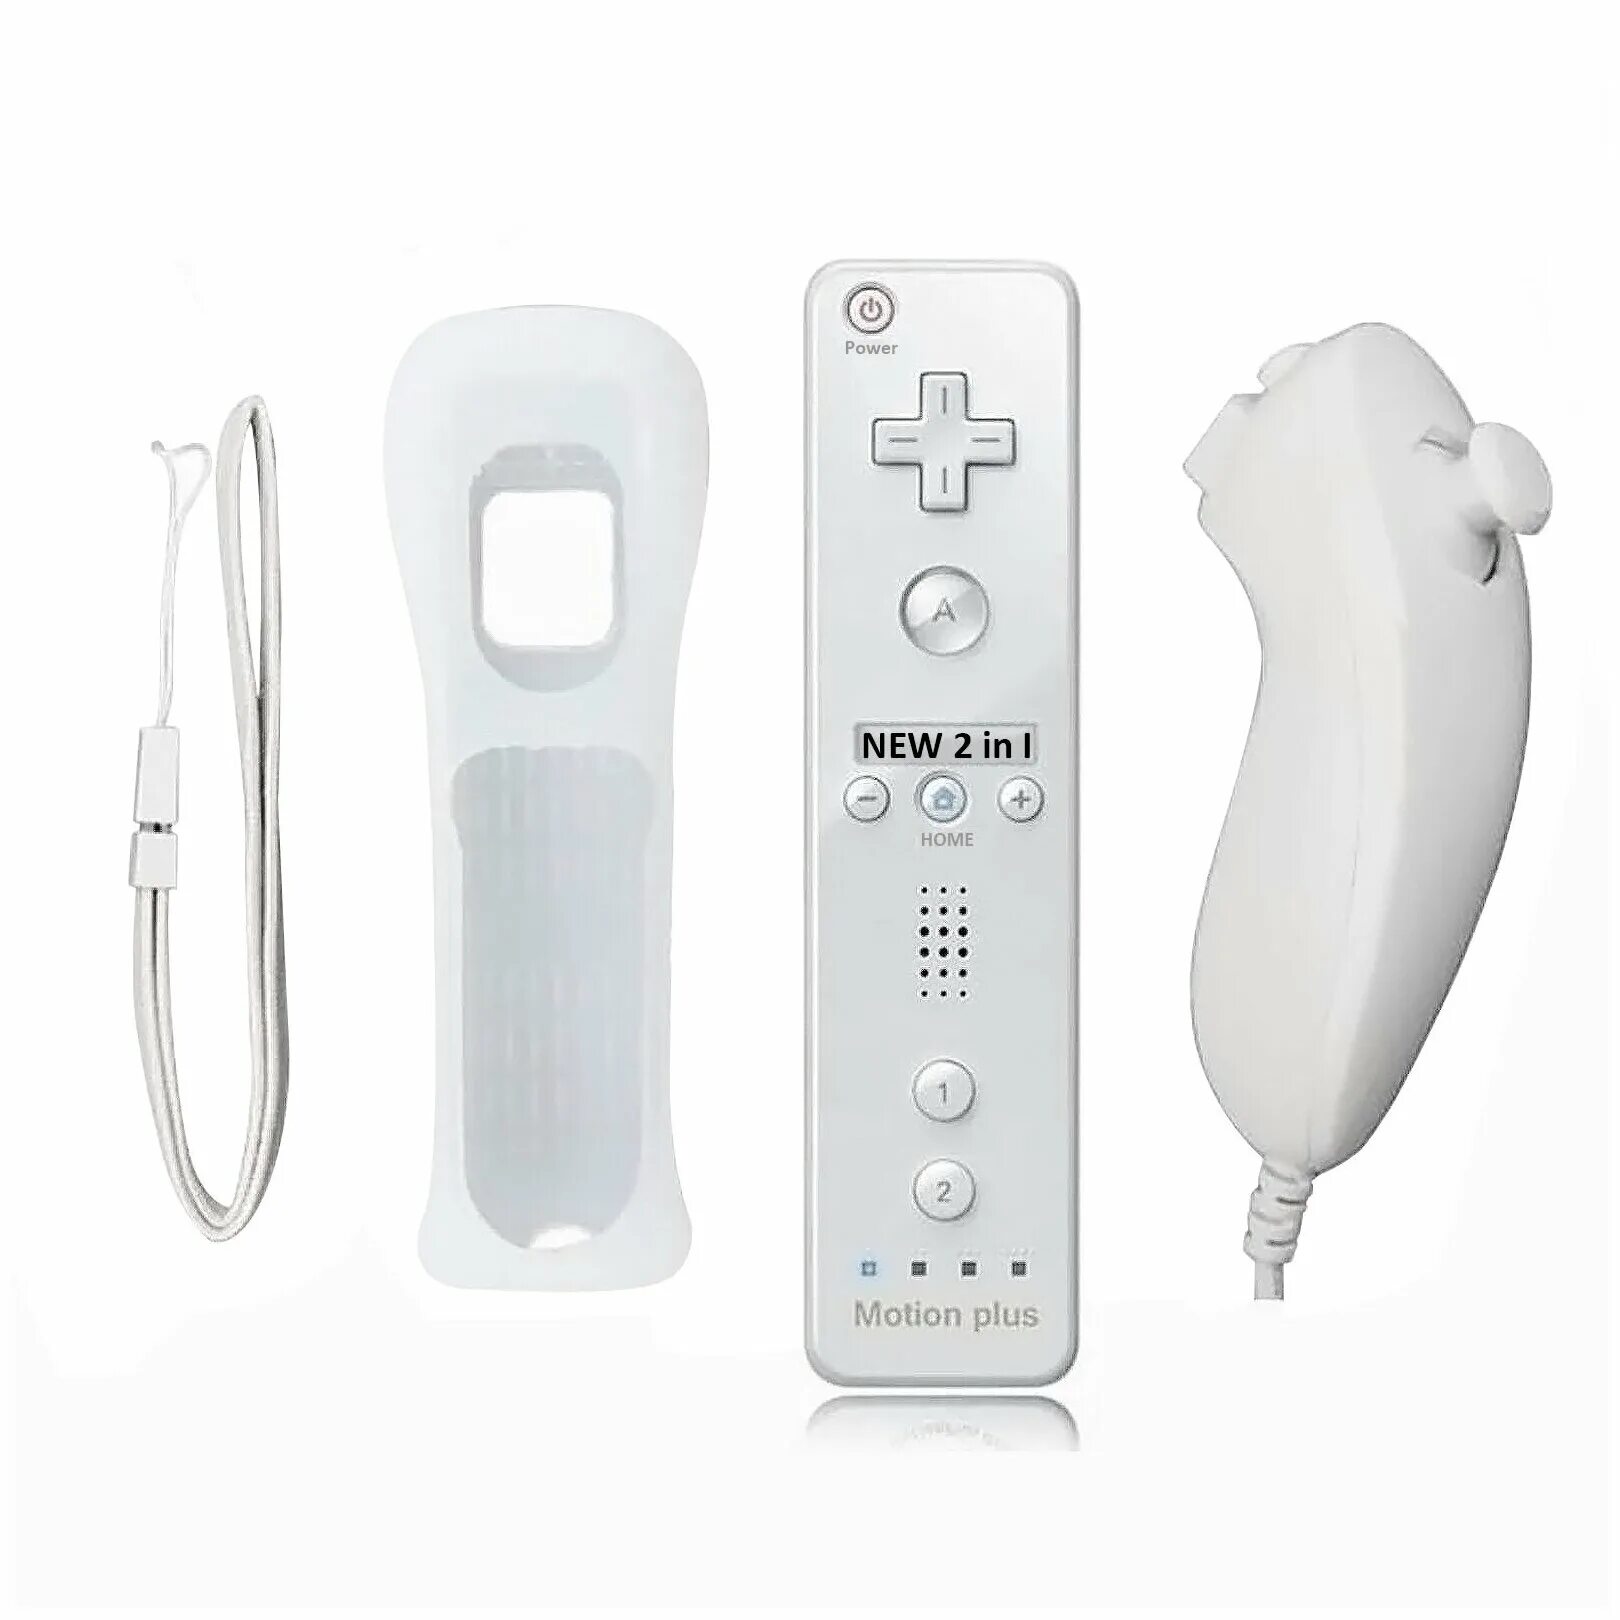 Nintendo Wii Nunchuk. Wii Remote Nunchuk. Remote Plus Wii Nunchuk. Nintendo Wii Controller. Моушен плюс